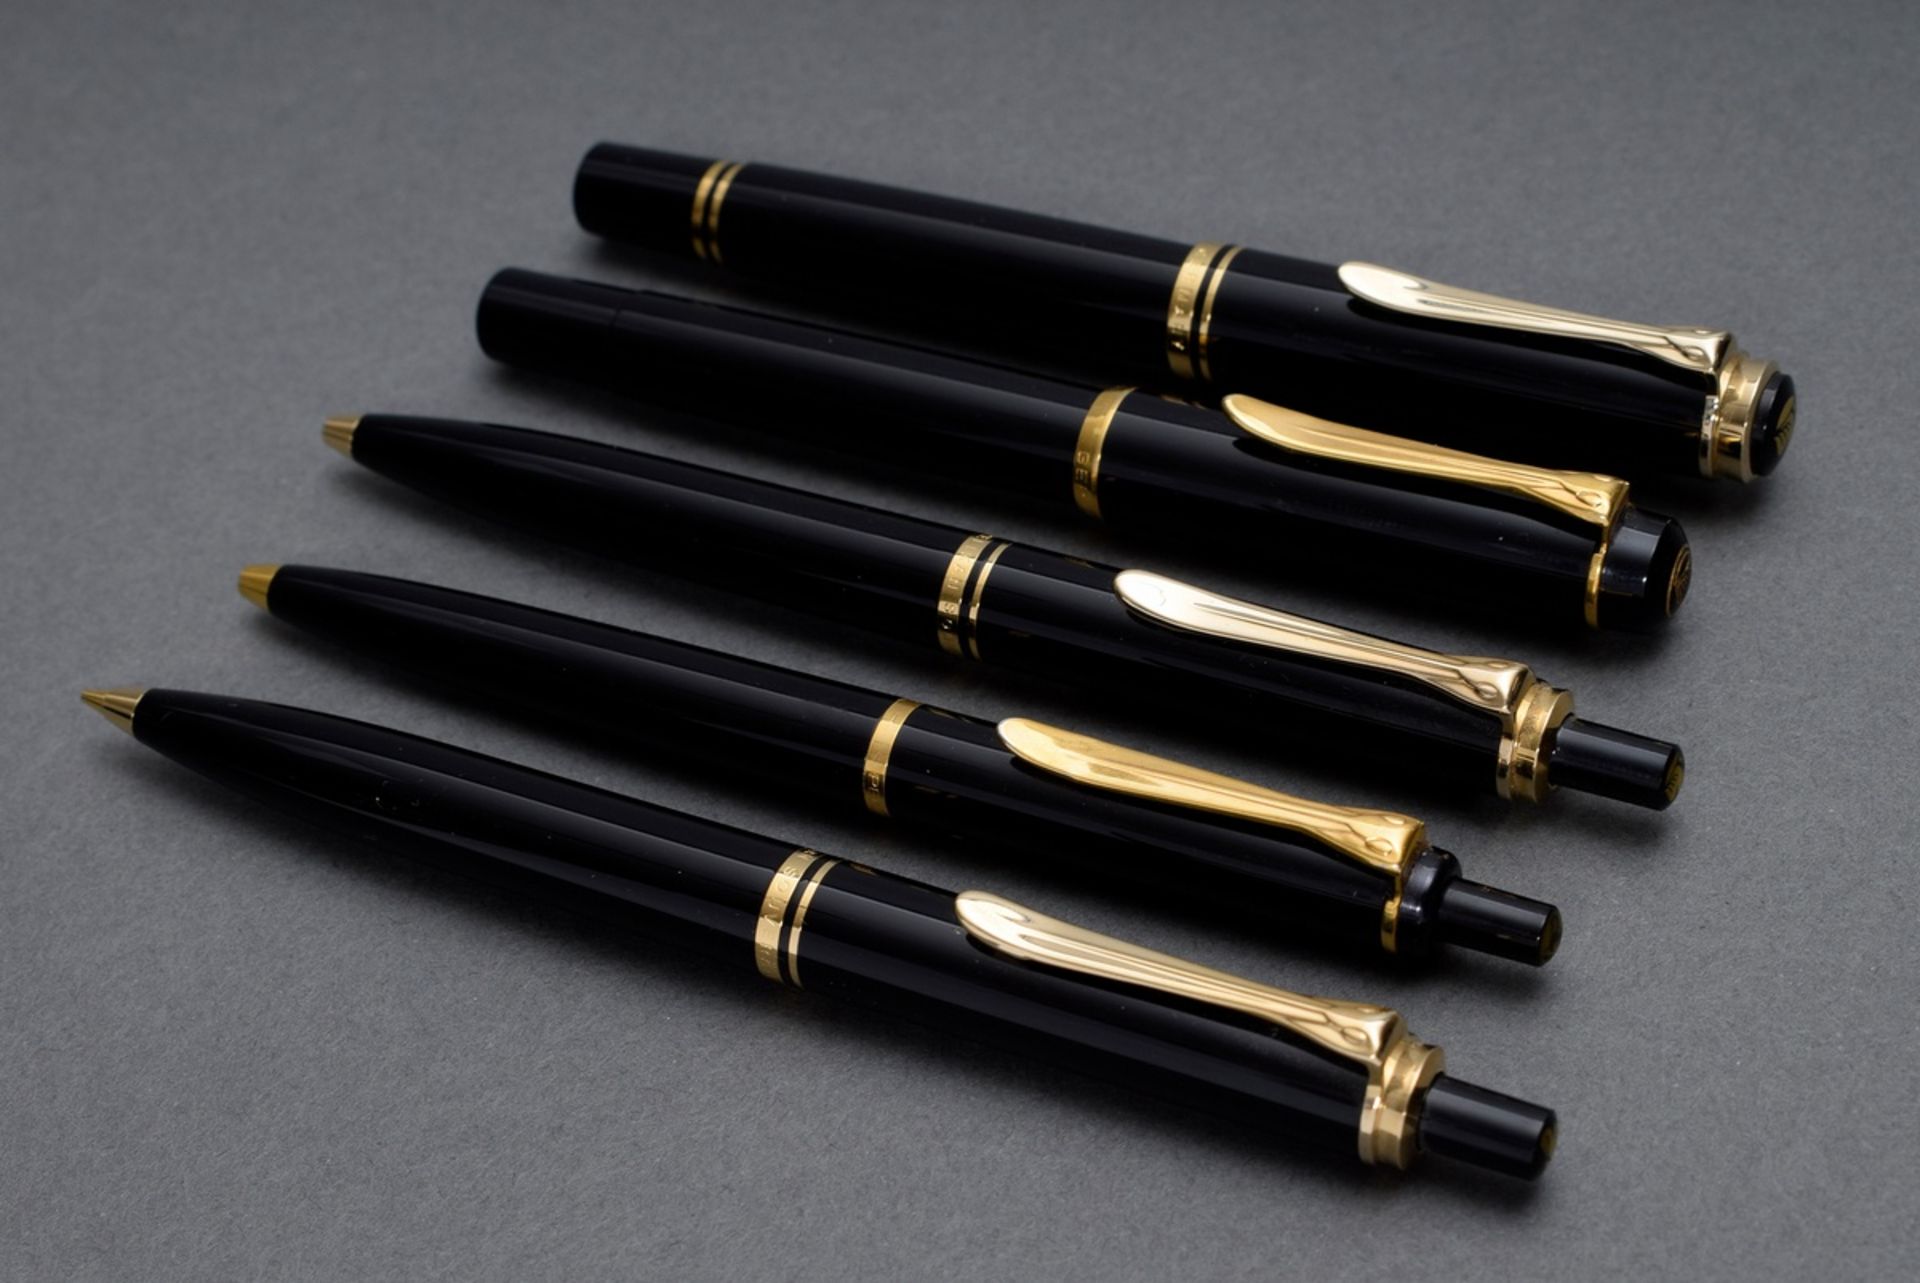 5 Diverse Pelikan Schreibgeräte in Original Pelikan Lederetui: 2 Füllfederhalter, 2 Kugelschreiber  - Bild 2 aus 2